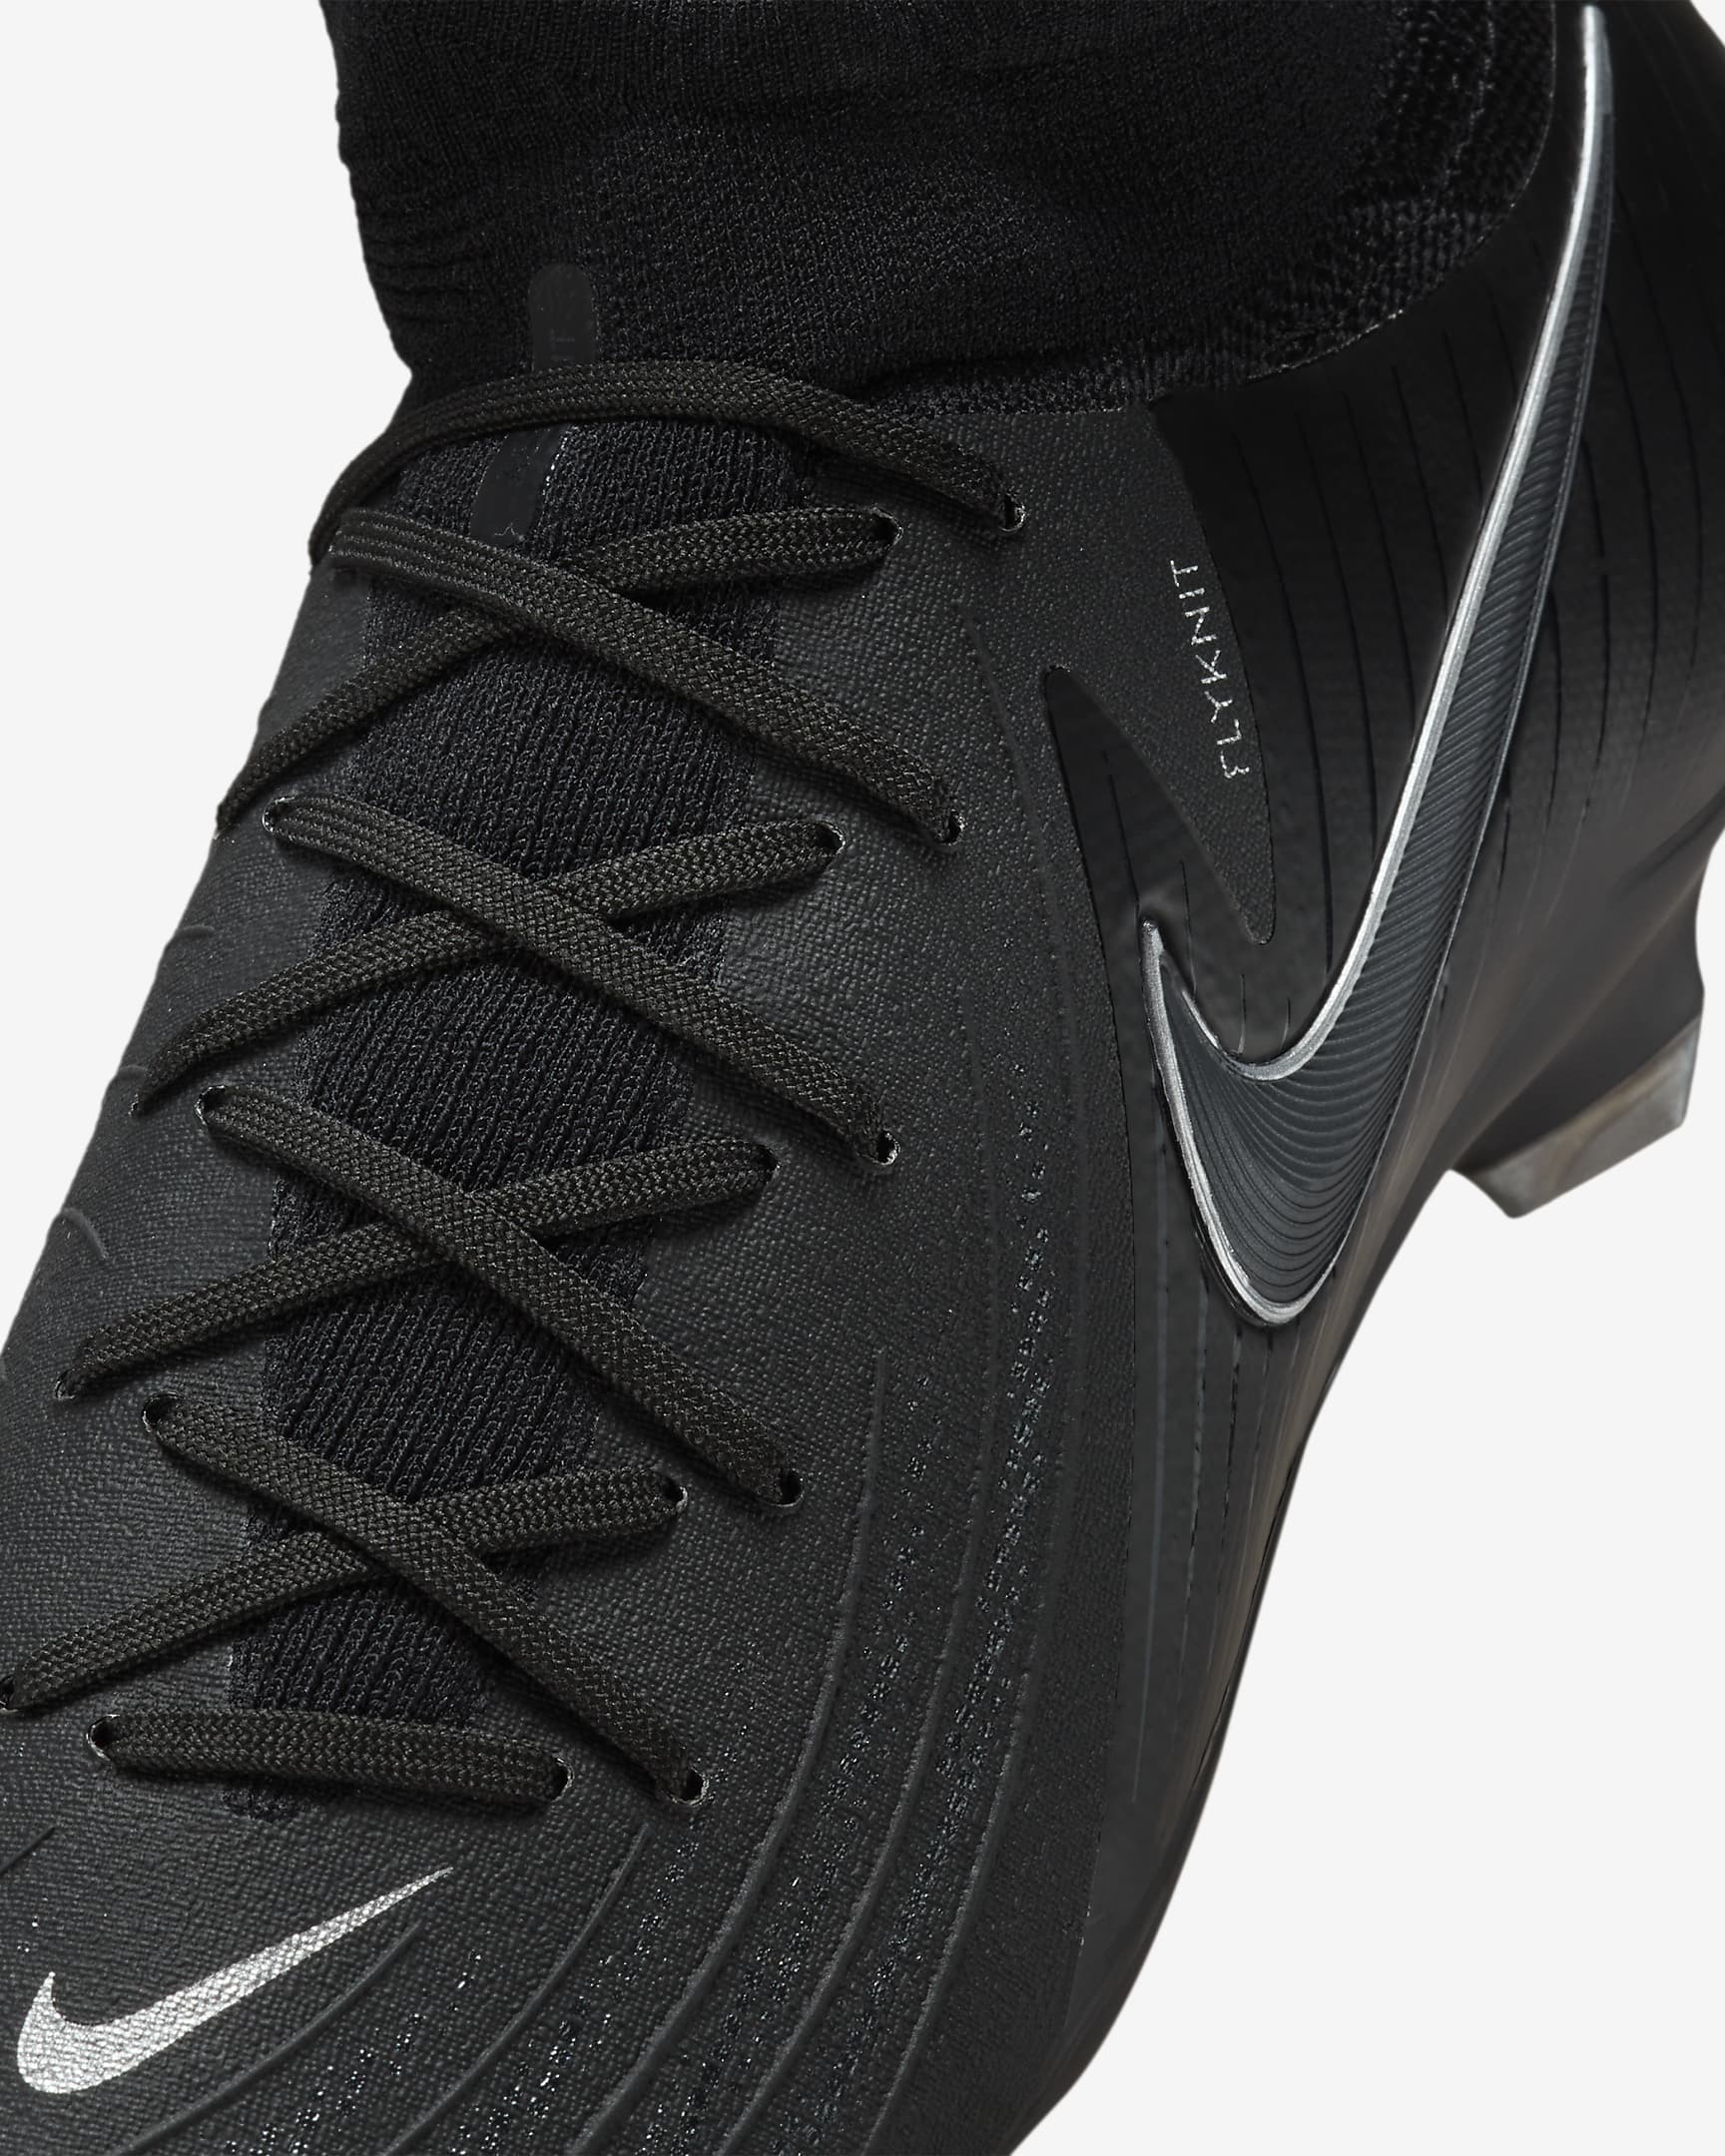 Nike Phantom Luna 2 Pro FG High-Top Football Boot - Black/Black